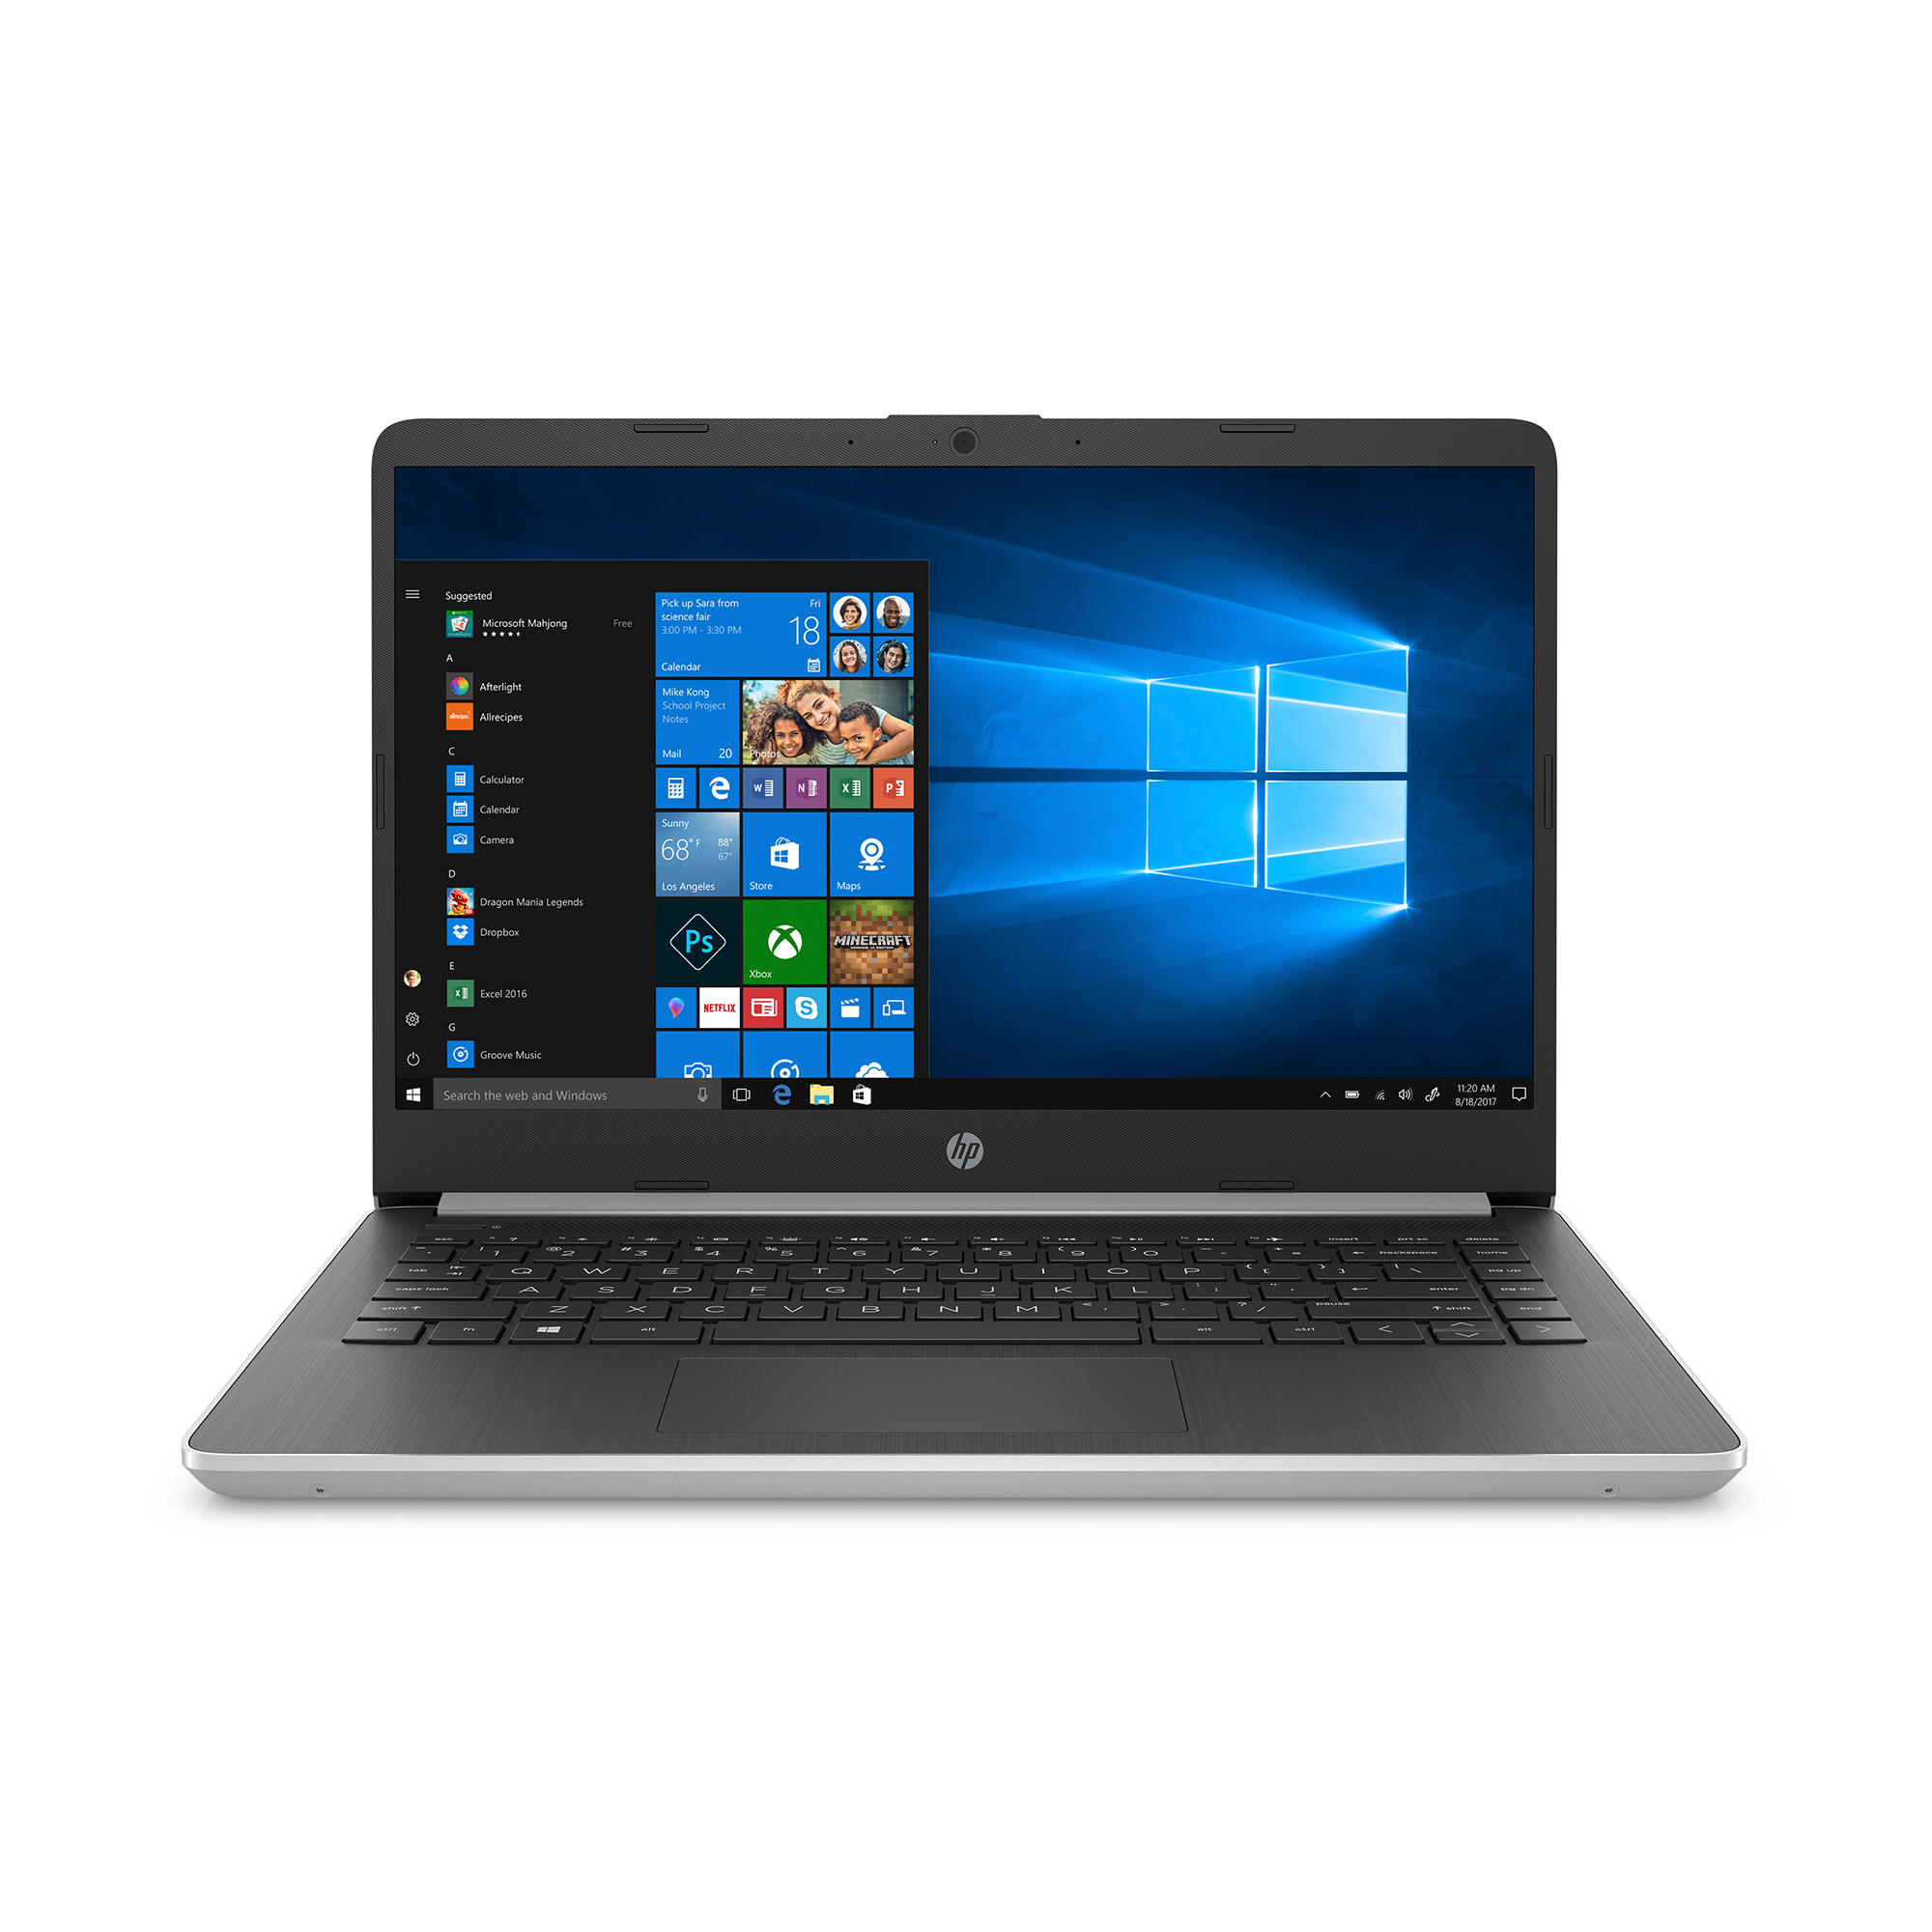 HP 14" Laptop, AMD Ryzen 3 3200U, 4GB SDRAM, 128GB SSD, Whisper Silver, 14-dk0028wm - image 1 of 7